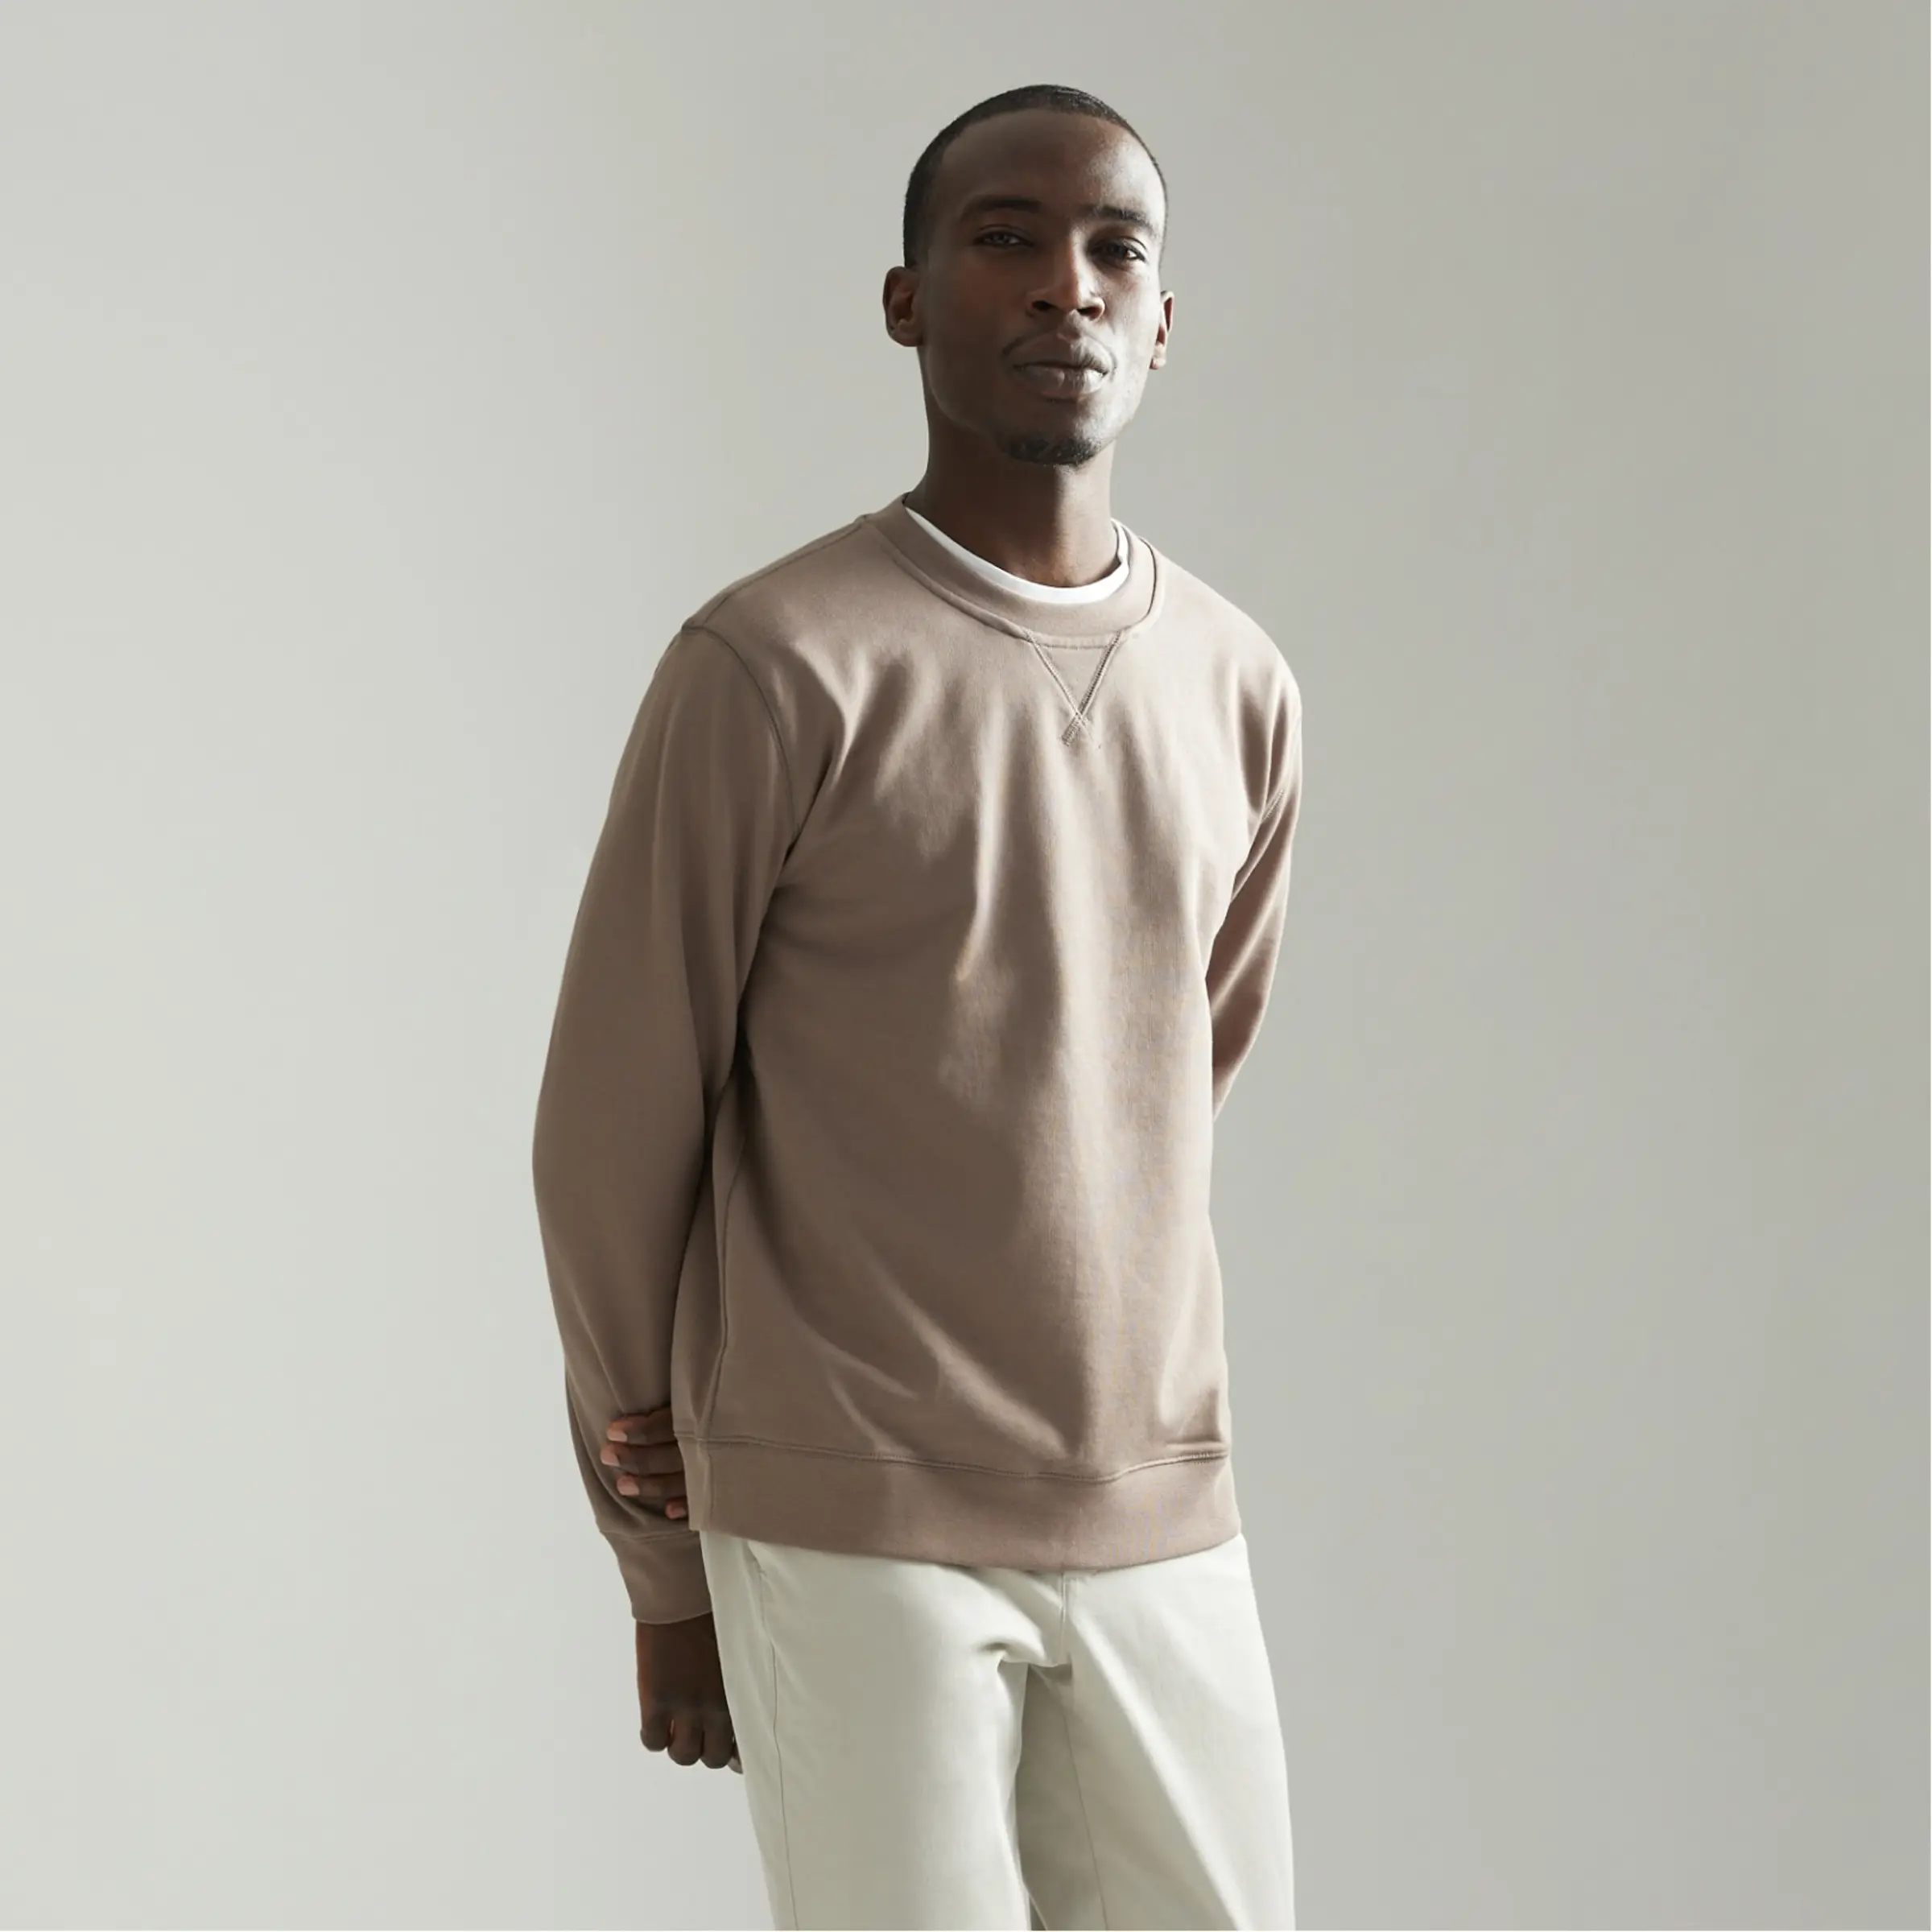 neutral crewneck sweatshirt with undershirt